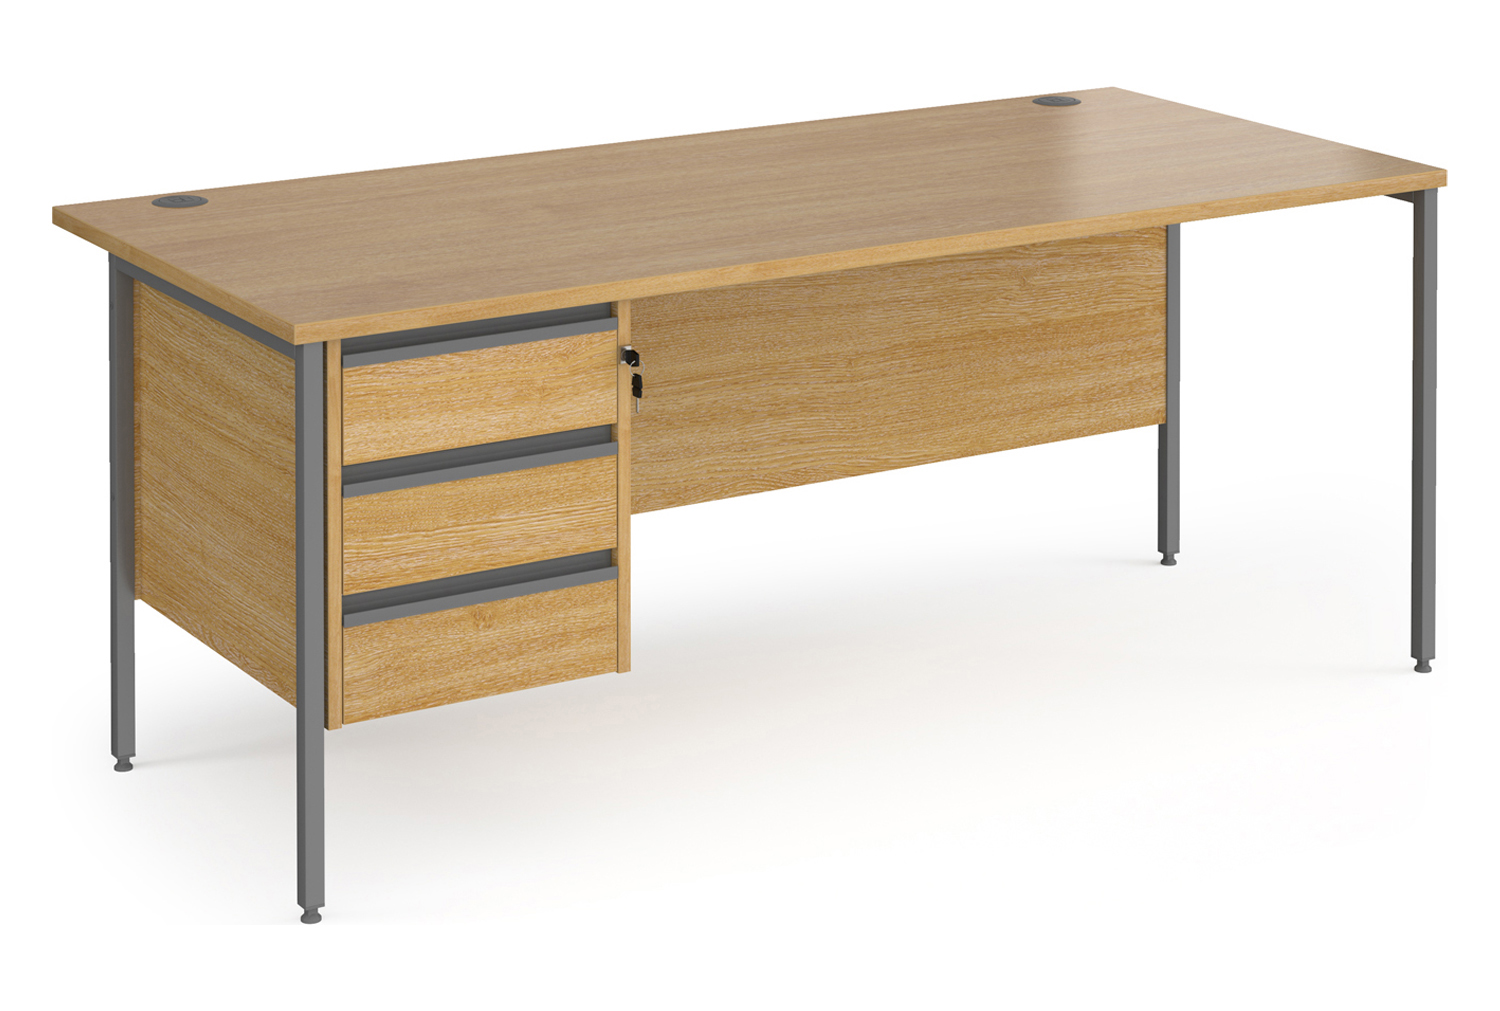 Value Line Classic+ Rectangular H-Leg Office Desk 3 Drawers (Graphite Leg), 180wx80dx73h (cm), Oak, Express Delivery